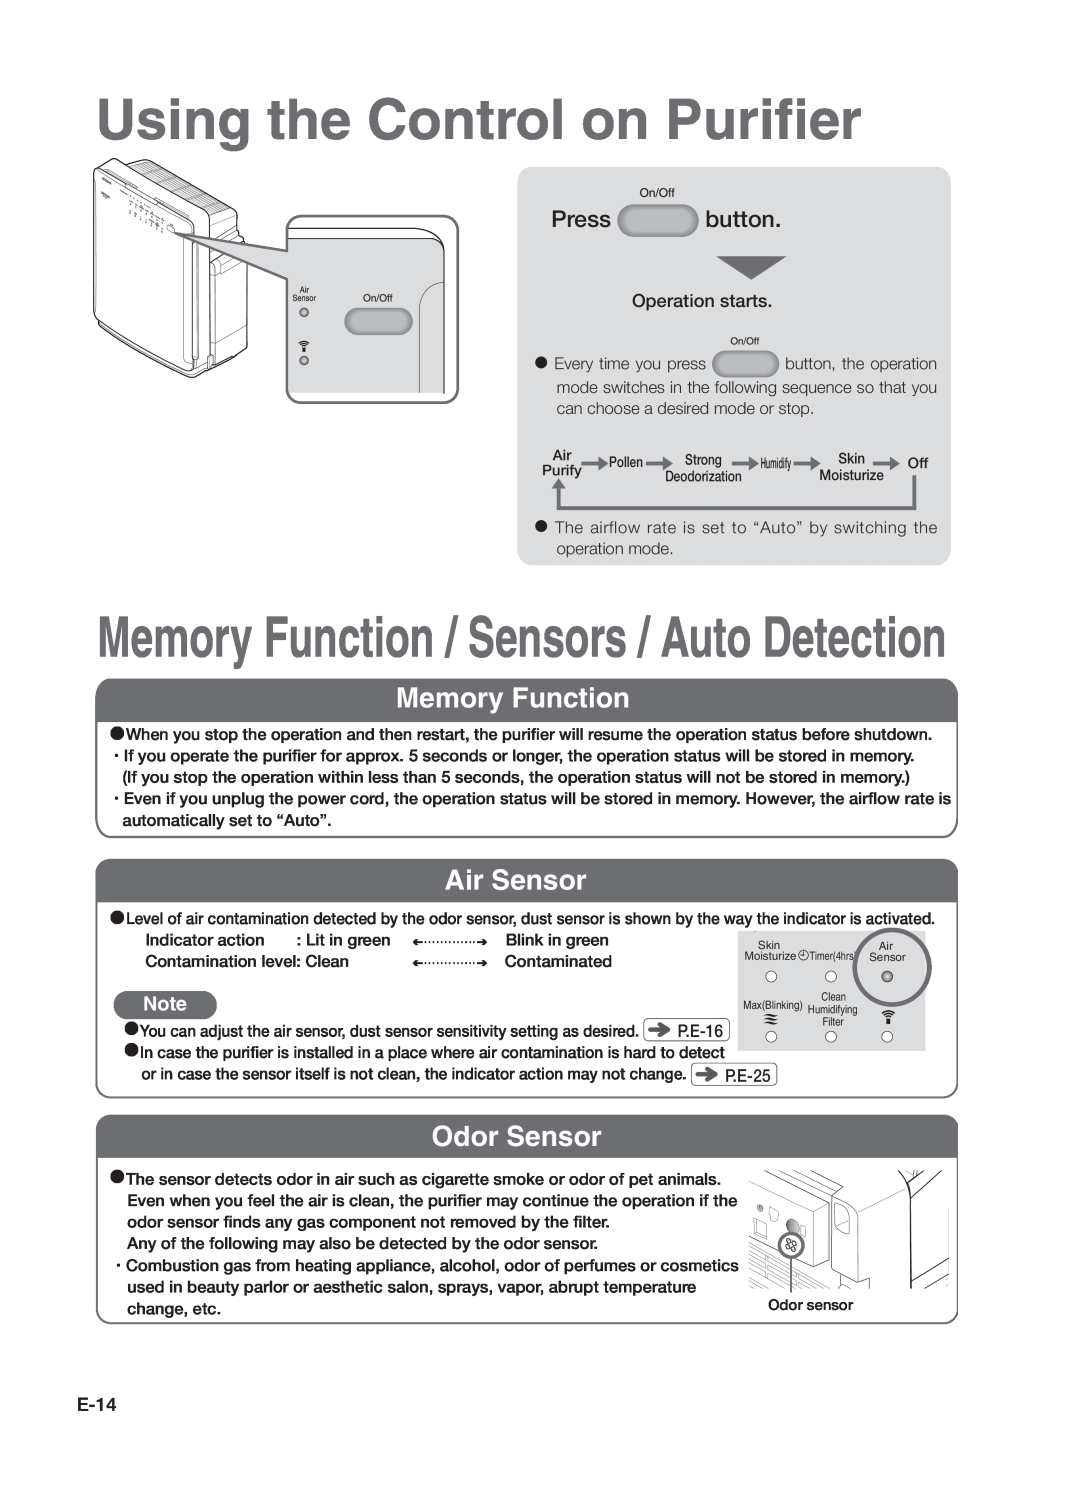 Hitachi EP-A7000 instruction manual Using the Control on Puriﬁer, Memory Function, Air Sensor, Odor Sensor, Pressbutton 